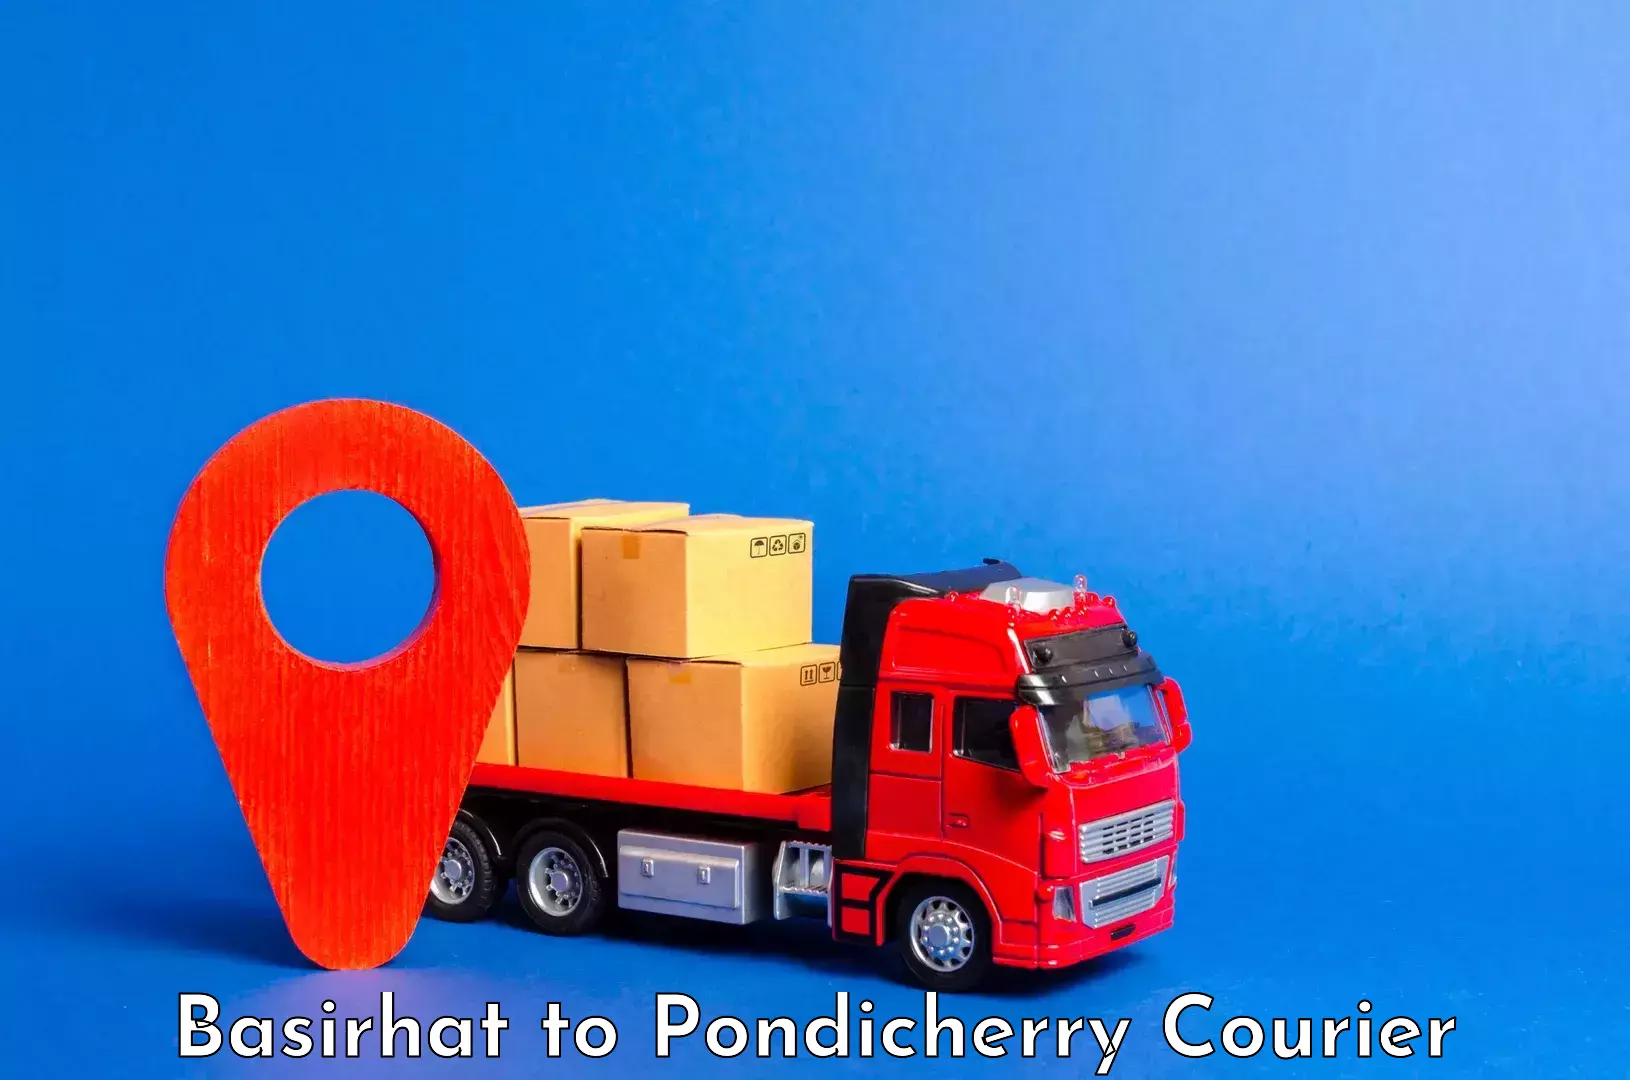 Luggage shipment specialists Basirhat to Pondicherry